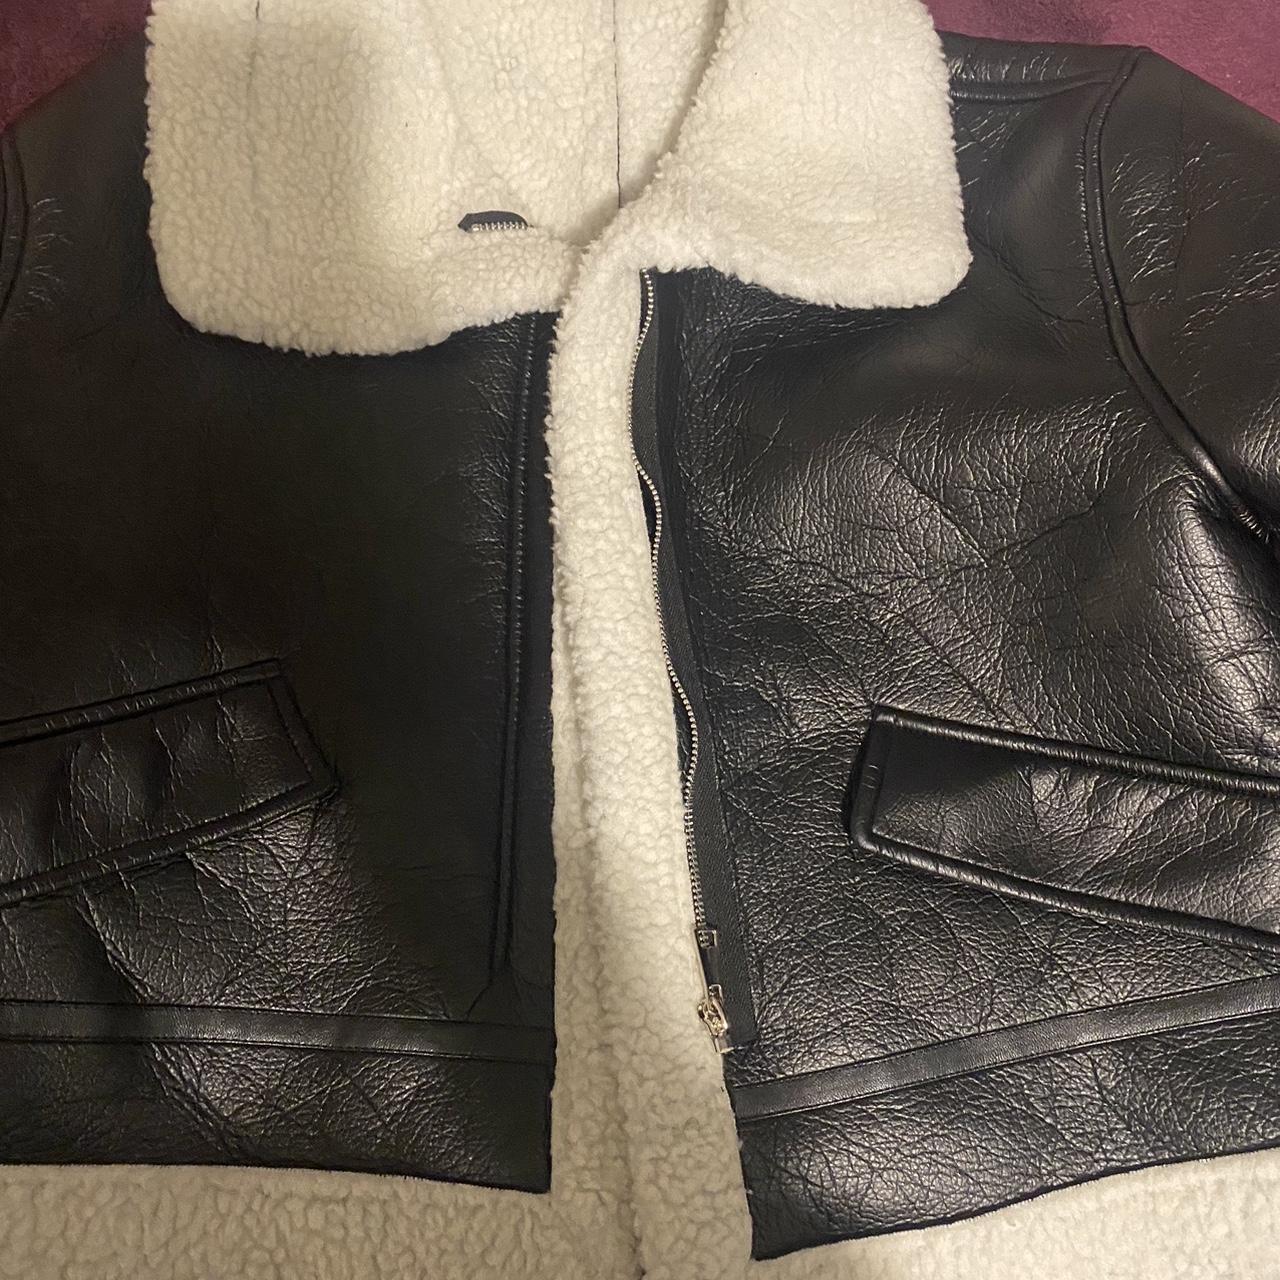 Teddy PU leather jacket Size M (10) Colour: black - Depop